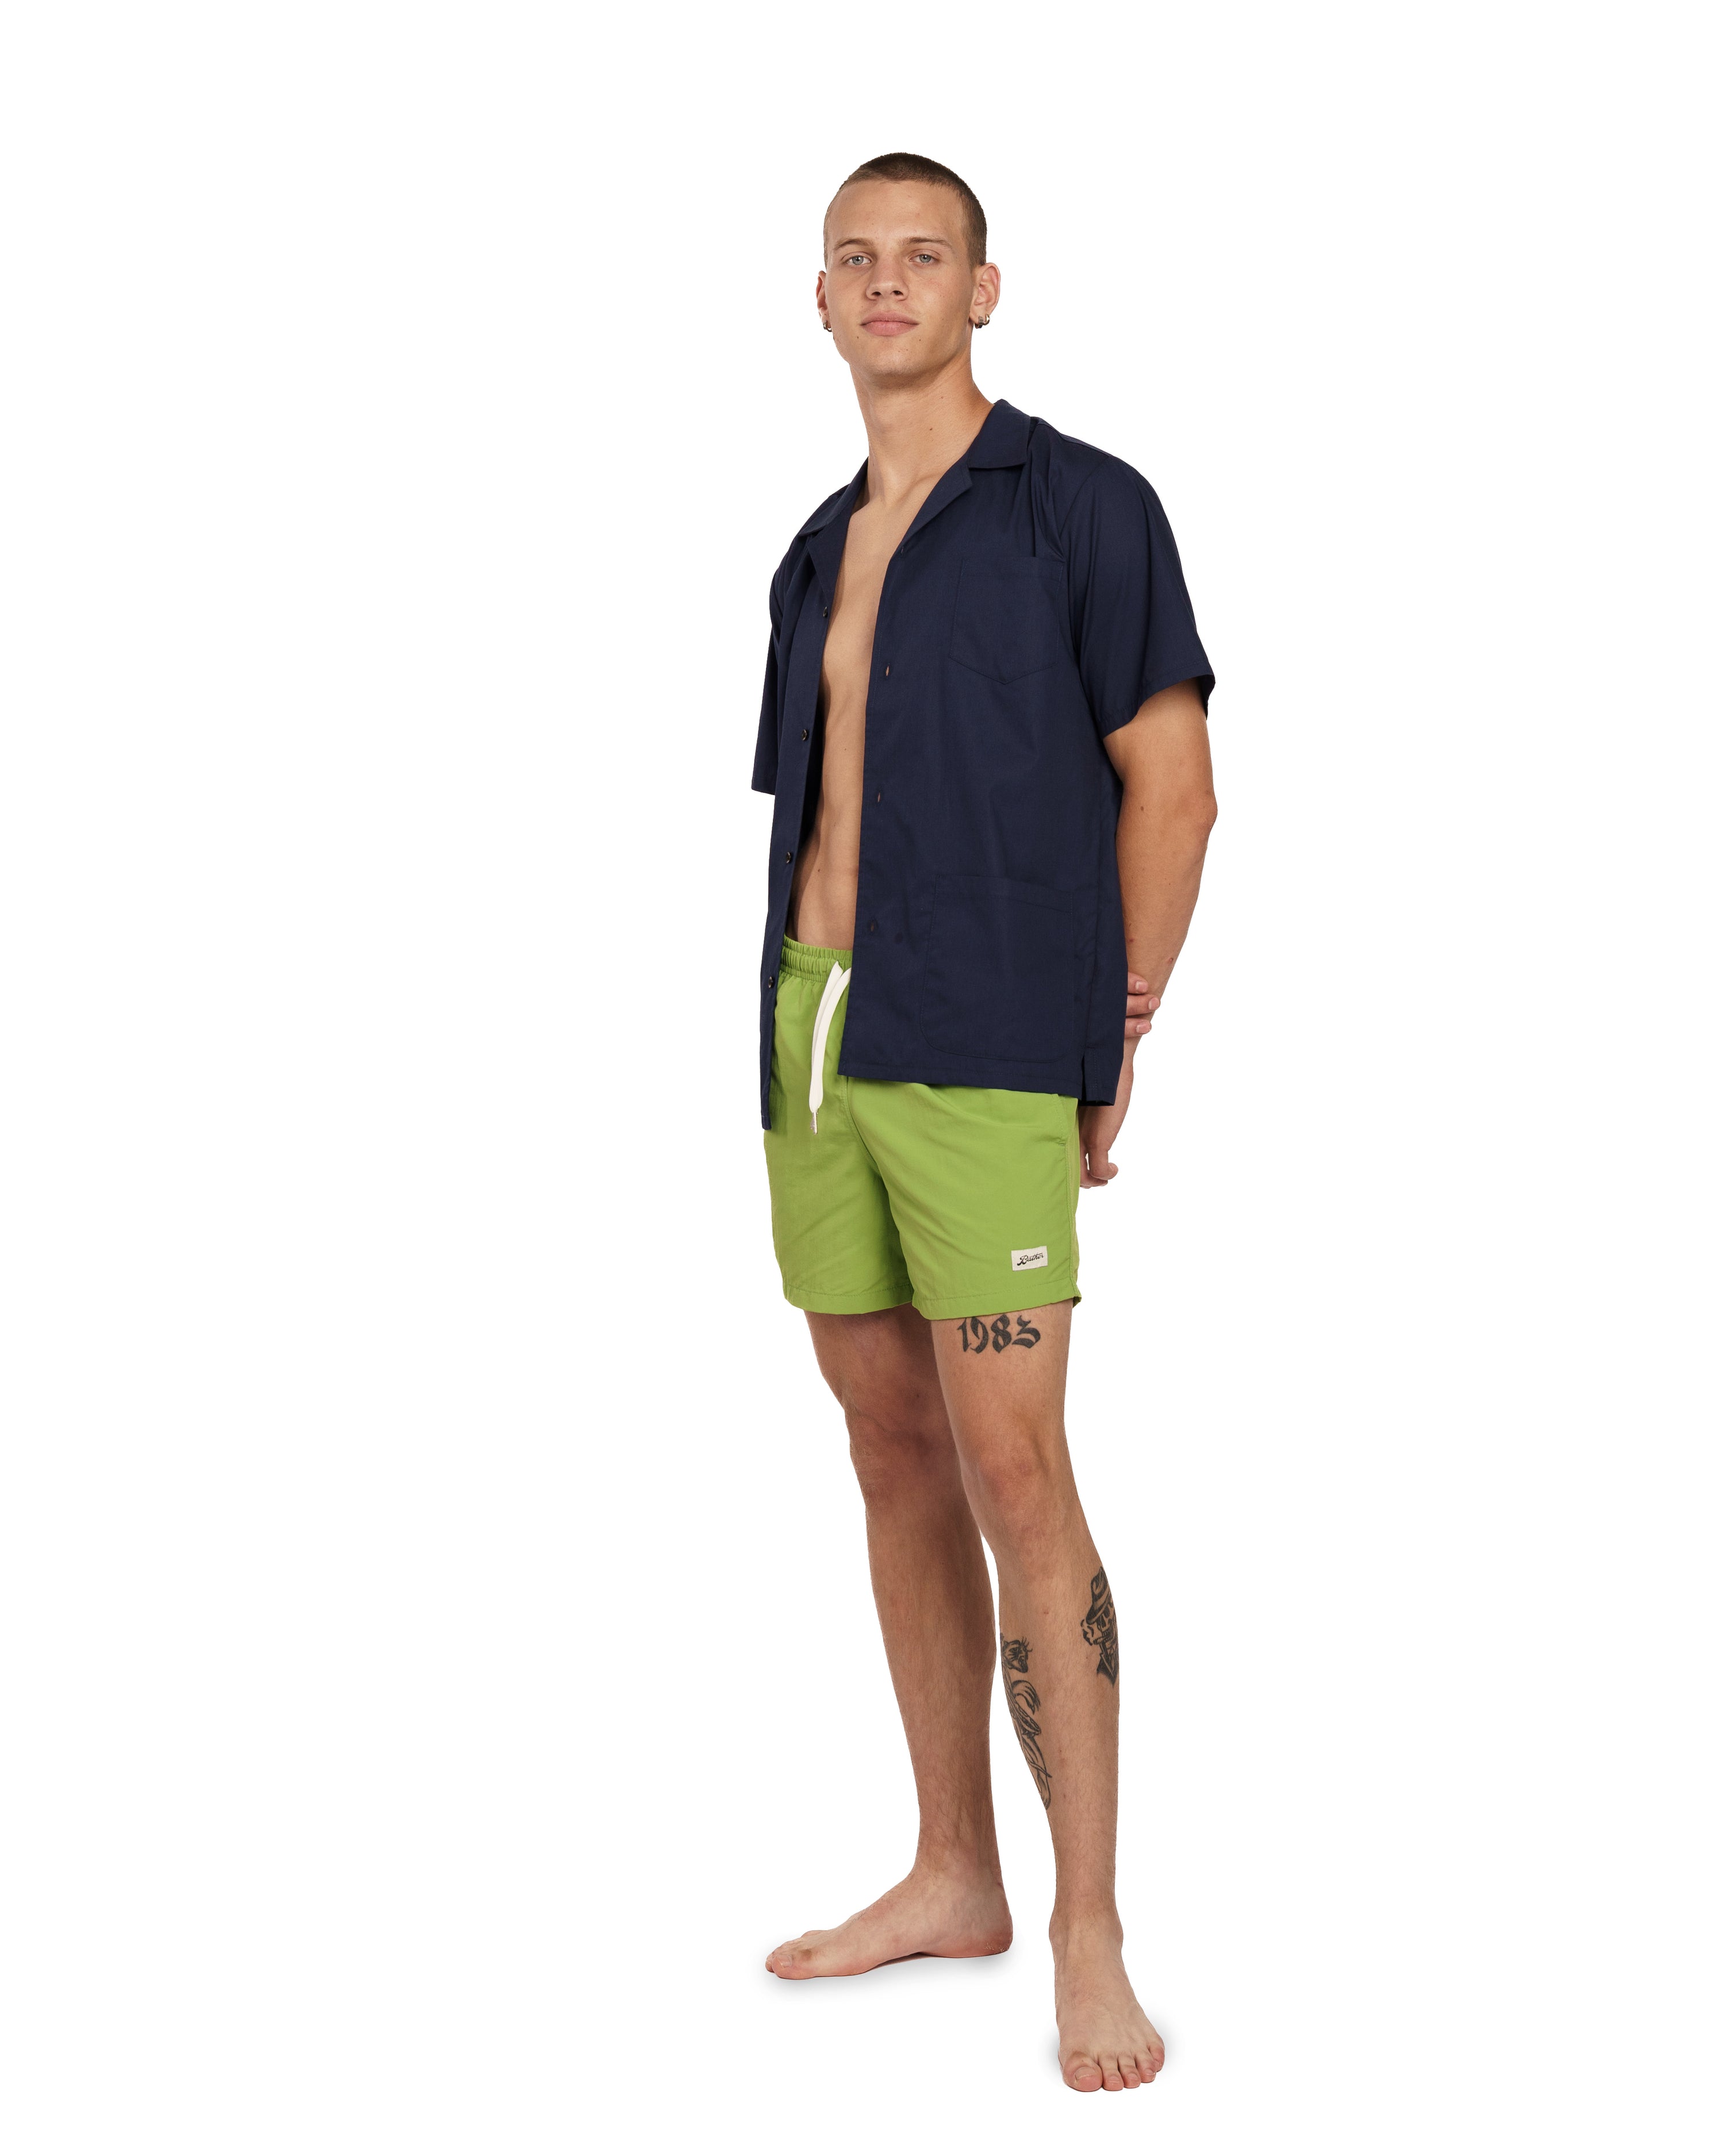 kiwi green Bather swim trunk on model